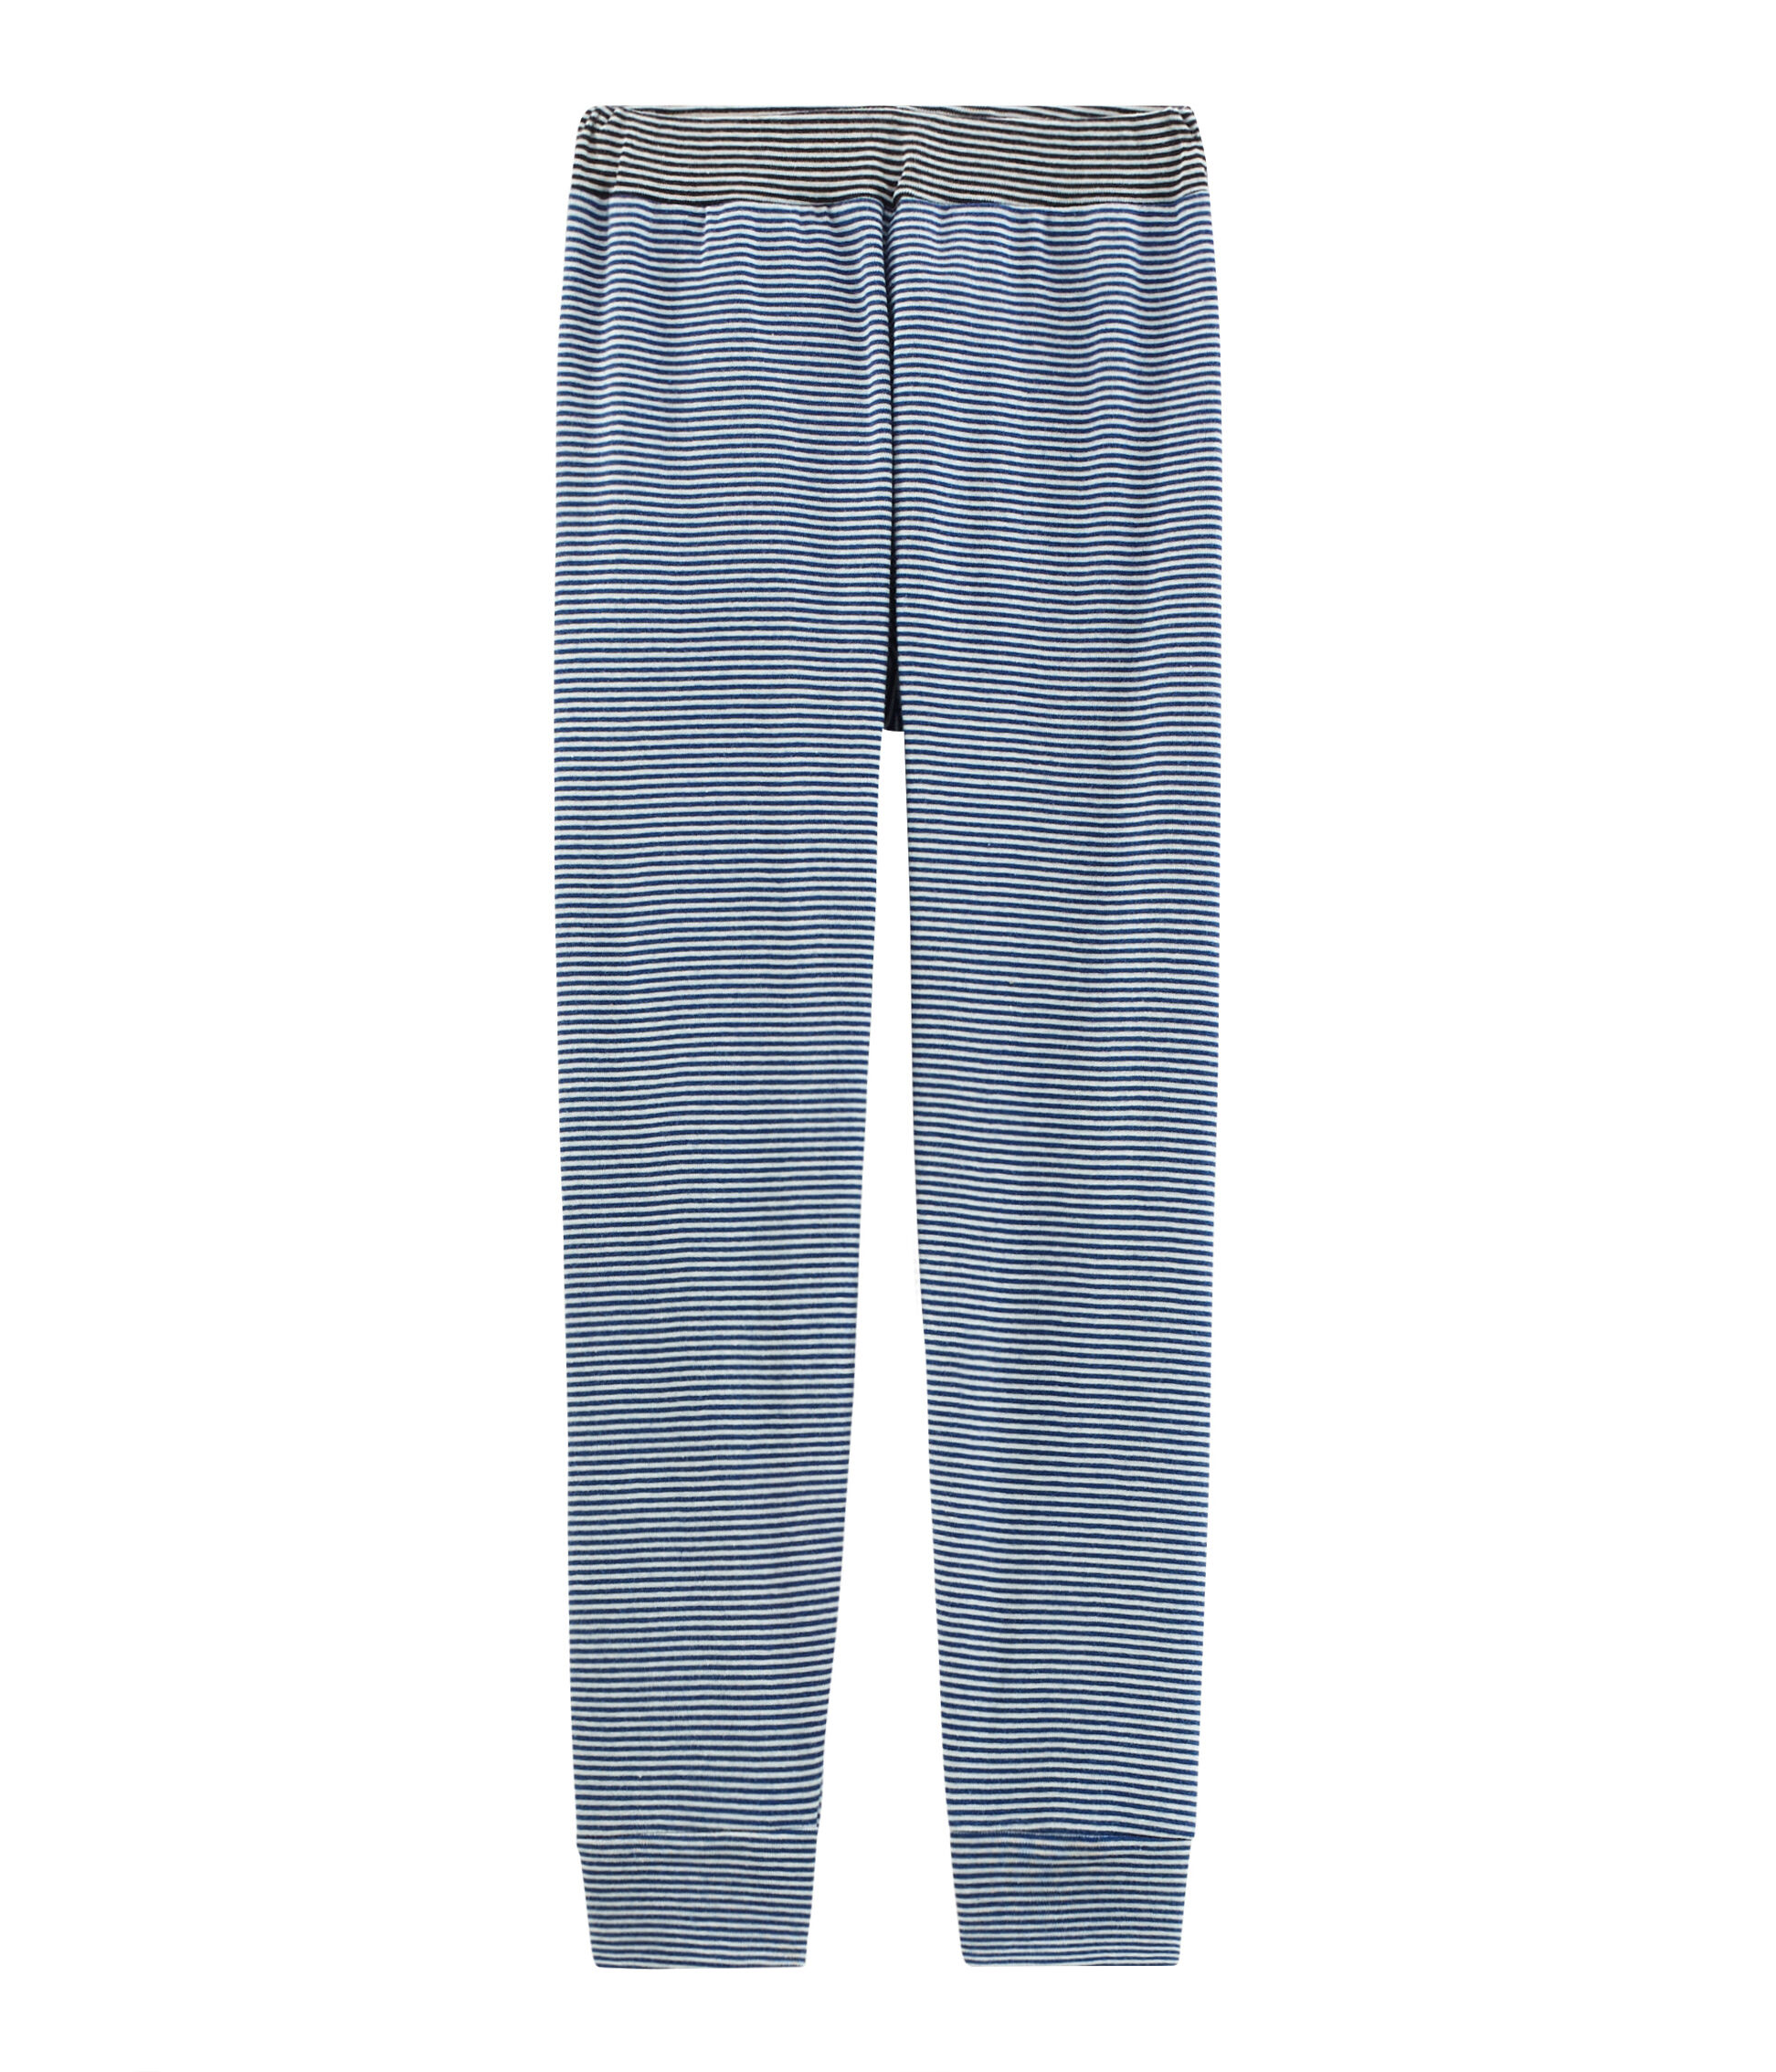 Petit Bateau Pantalones de Pijama para Ni/ños